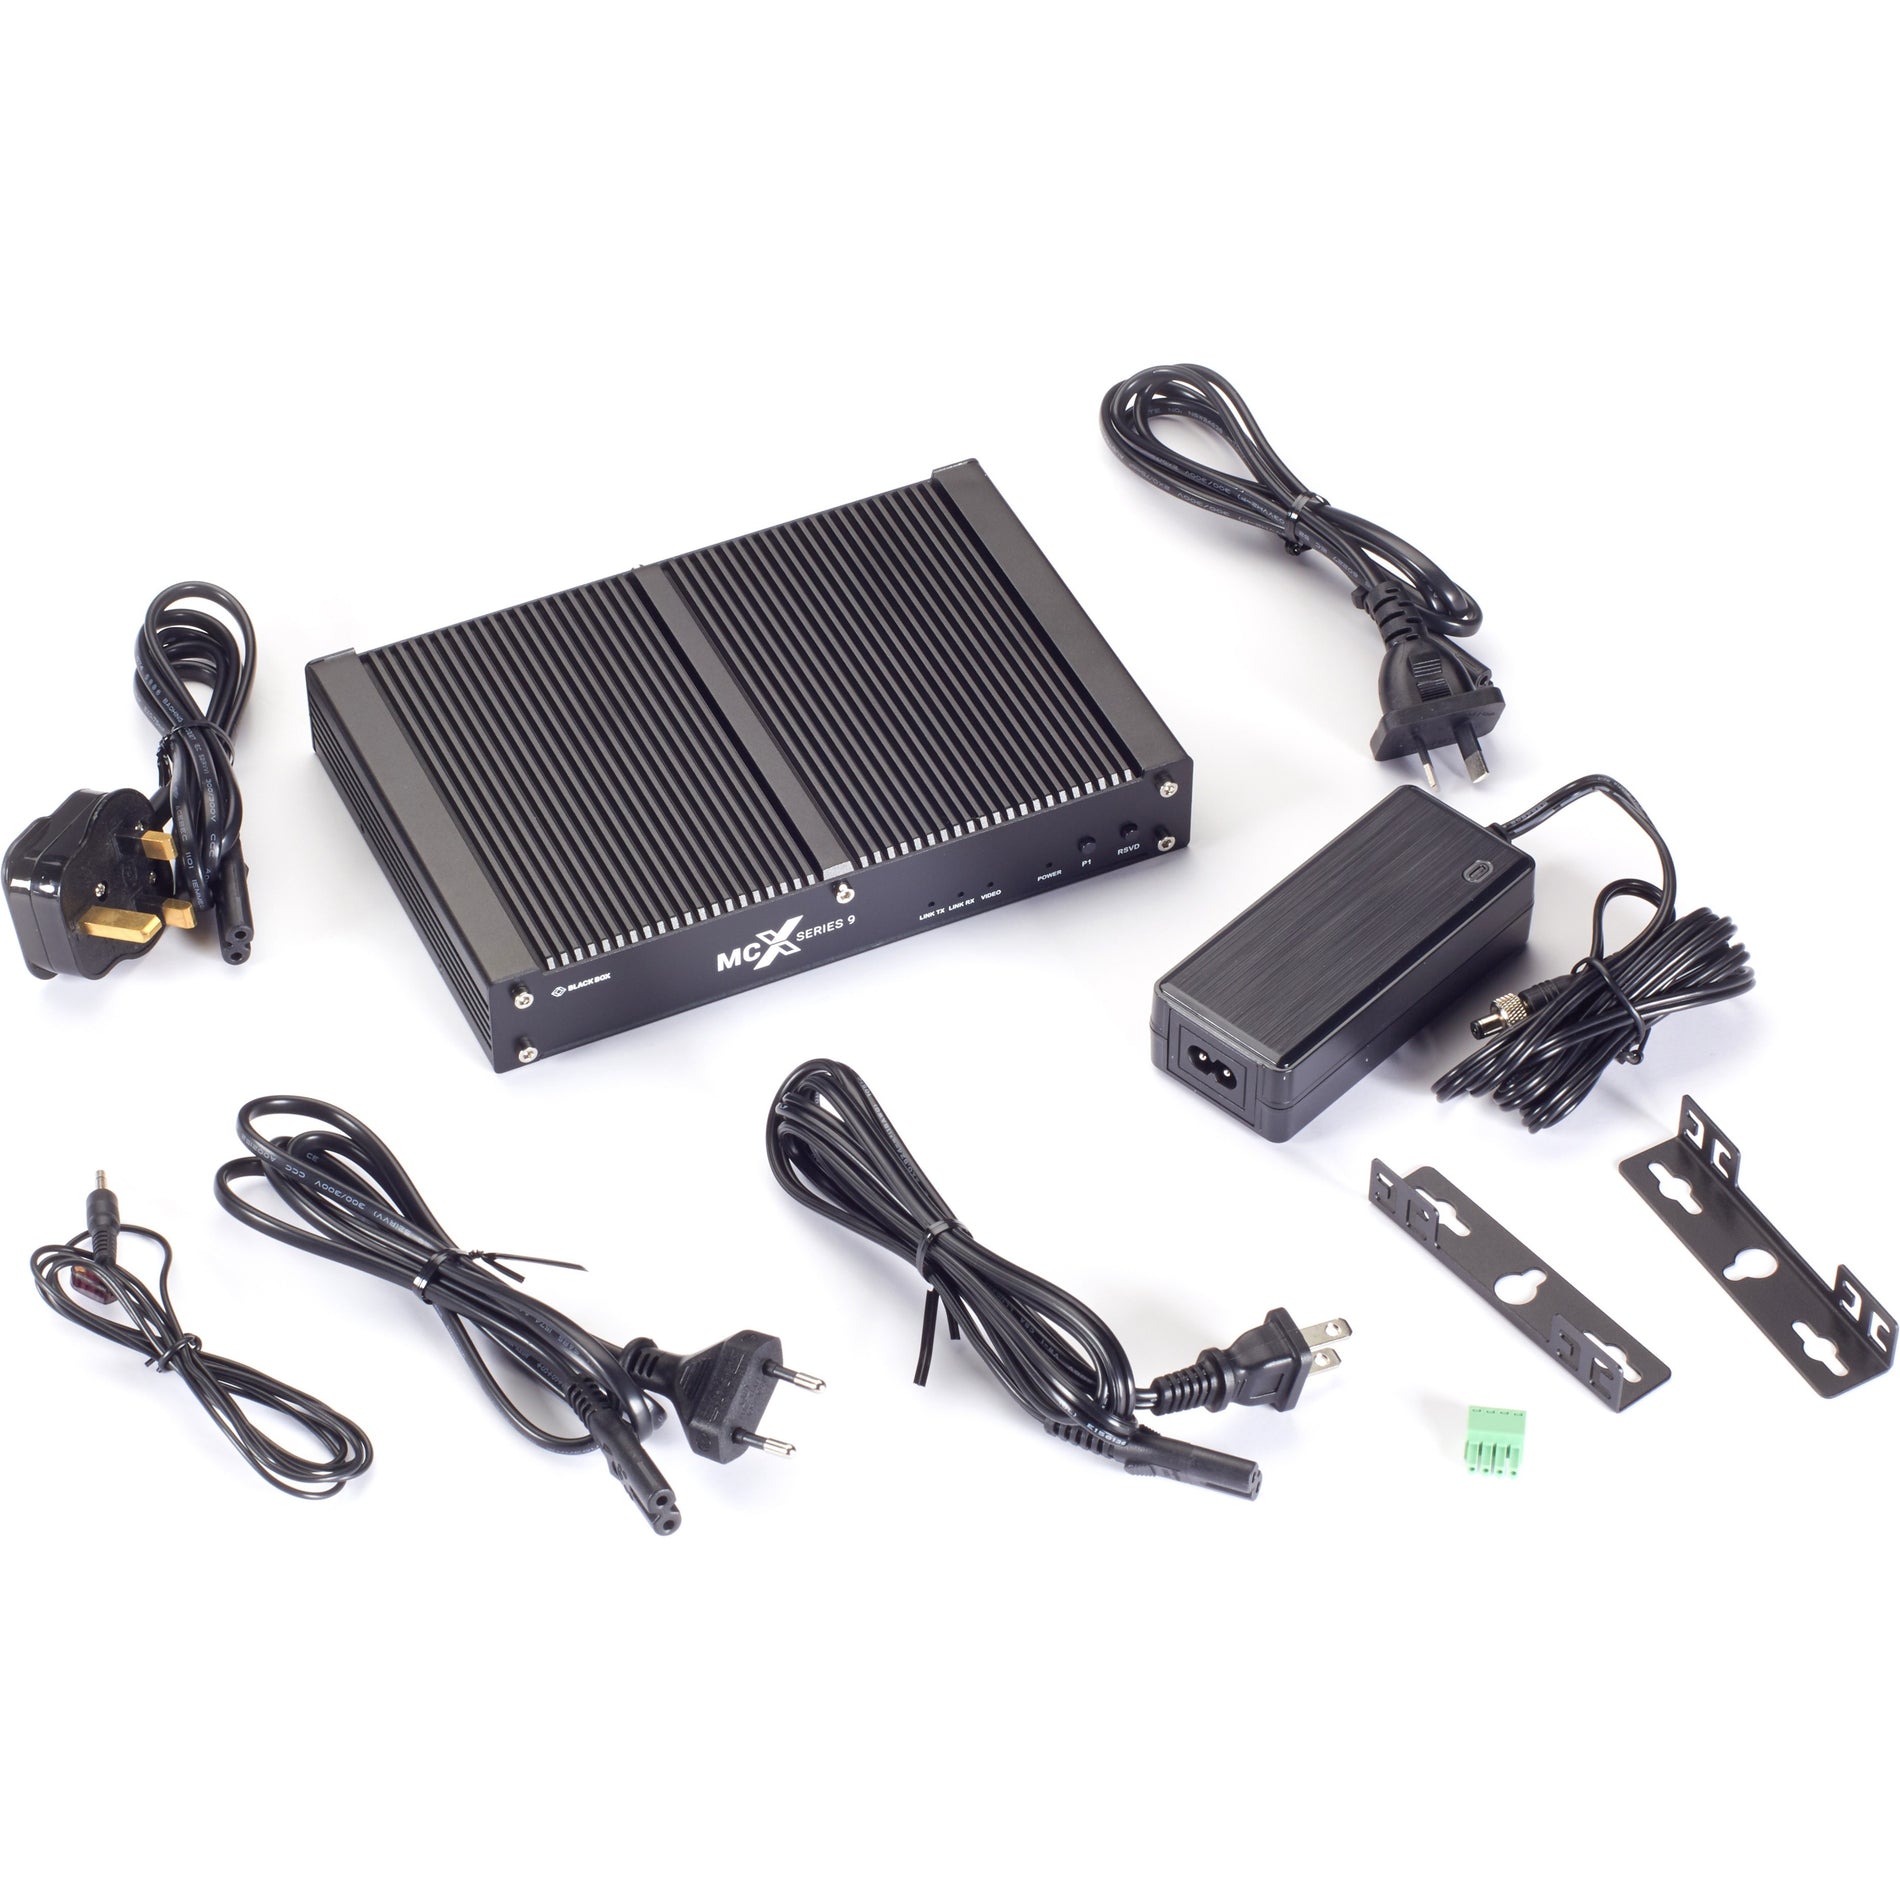 Black Box MCX-S9C-ENC MCX S9 4K60 Network AV Encoder - HDMI 2.0, Scaling, 10-GbE Copper, Video Encoder